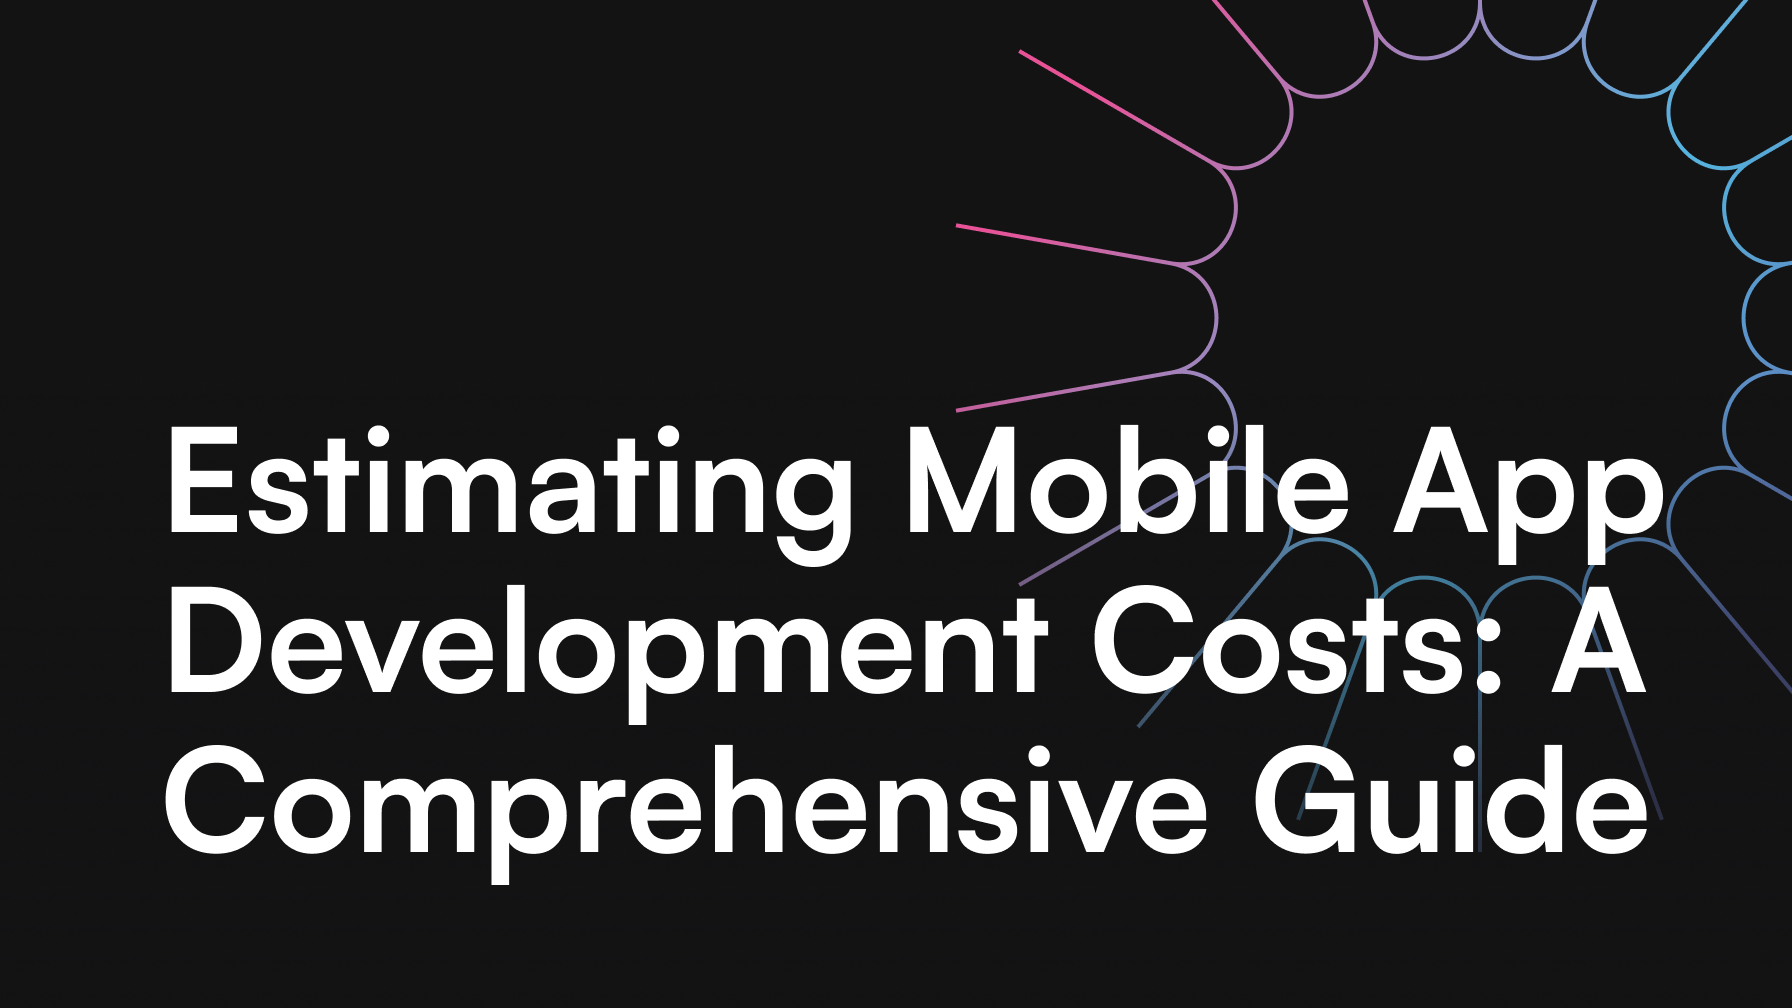 Estimating Mobile App Development Costs: A Comprehensive Guide